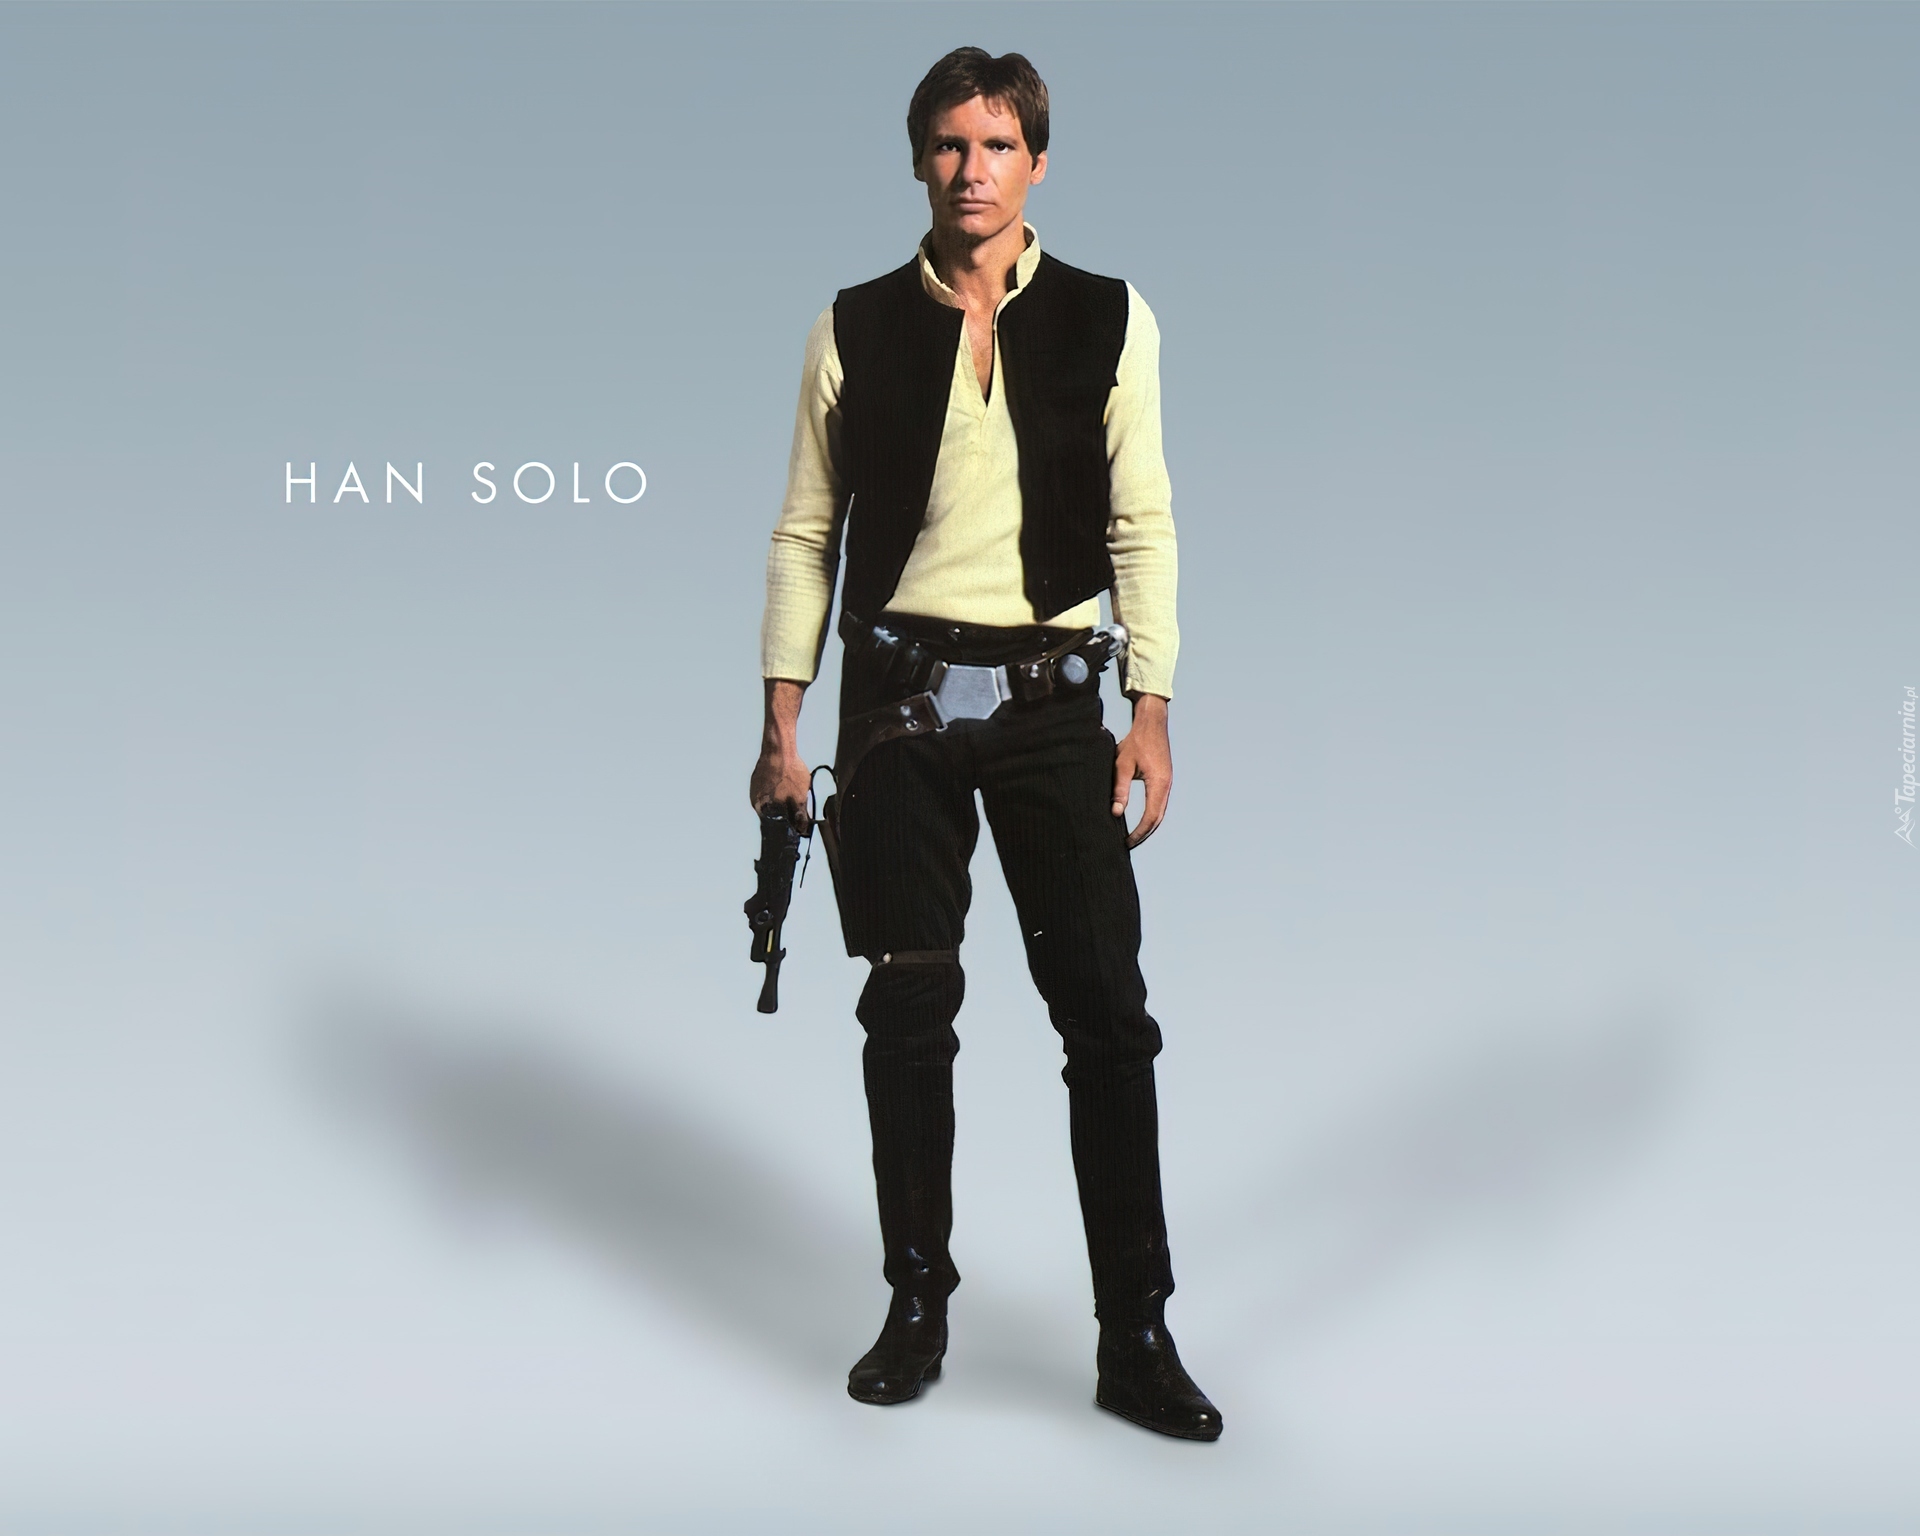 Star Wars, Harrison Ford, stoi, uzbrojony